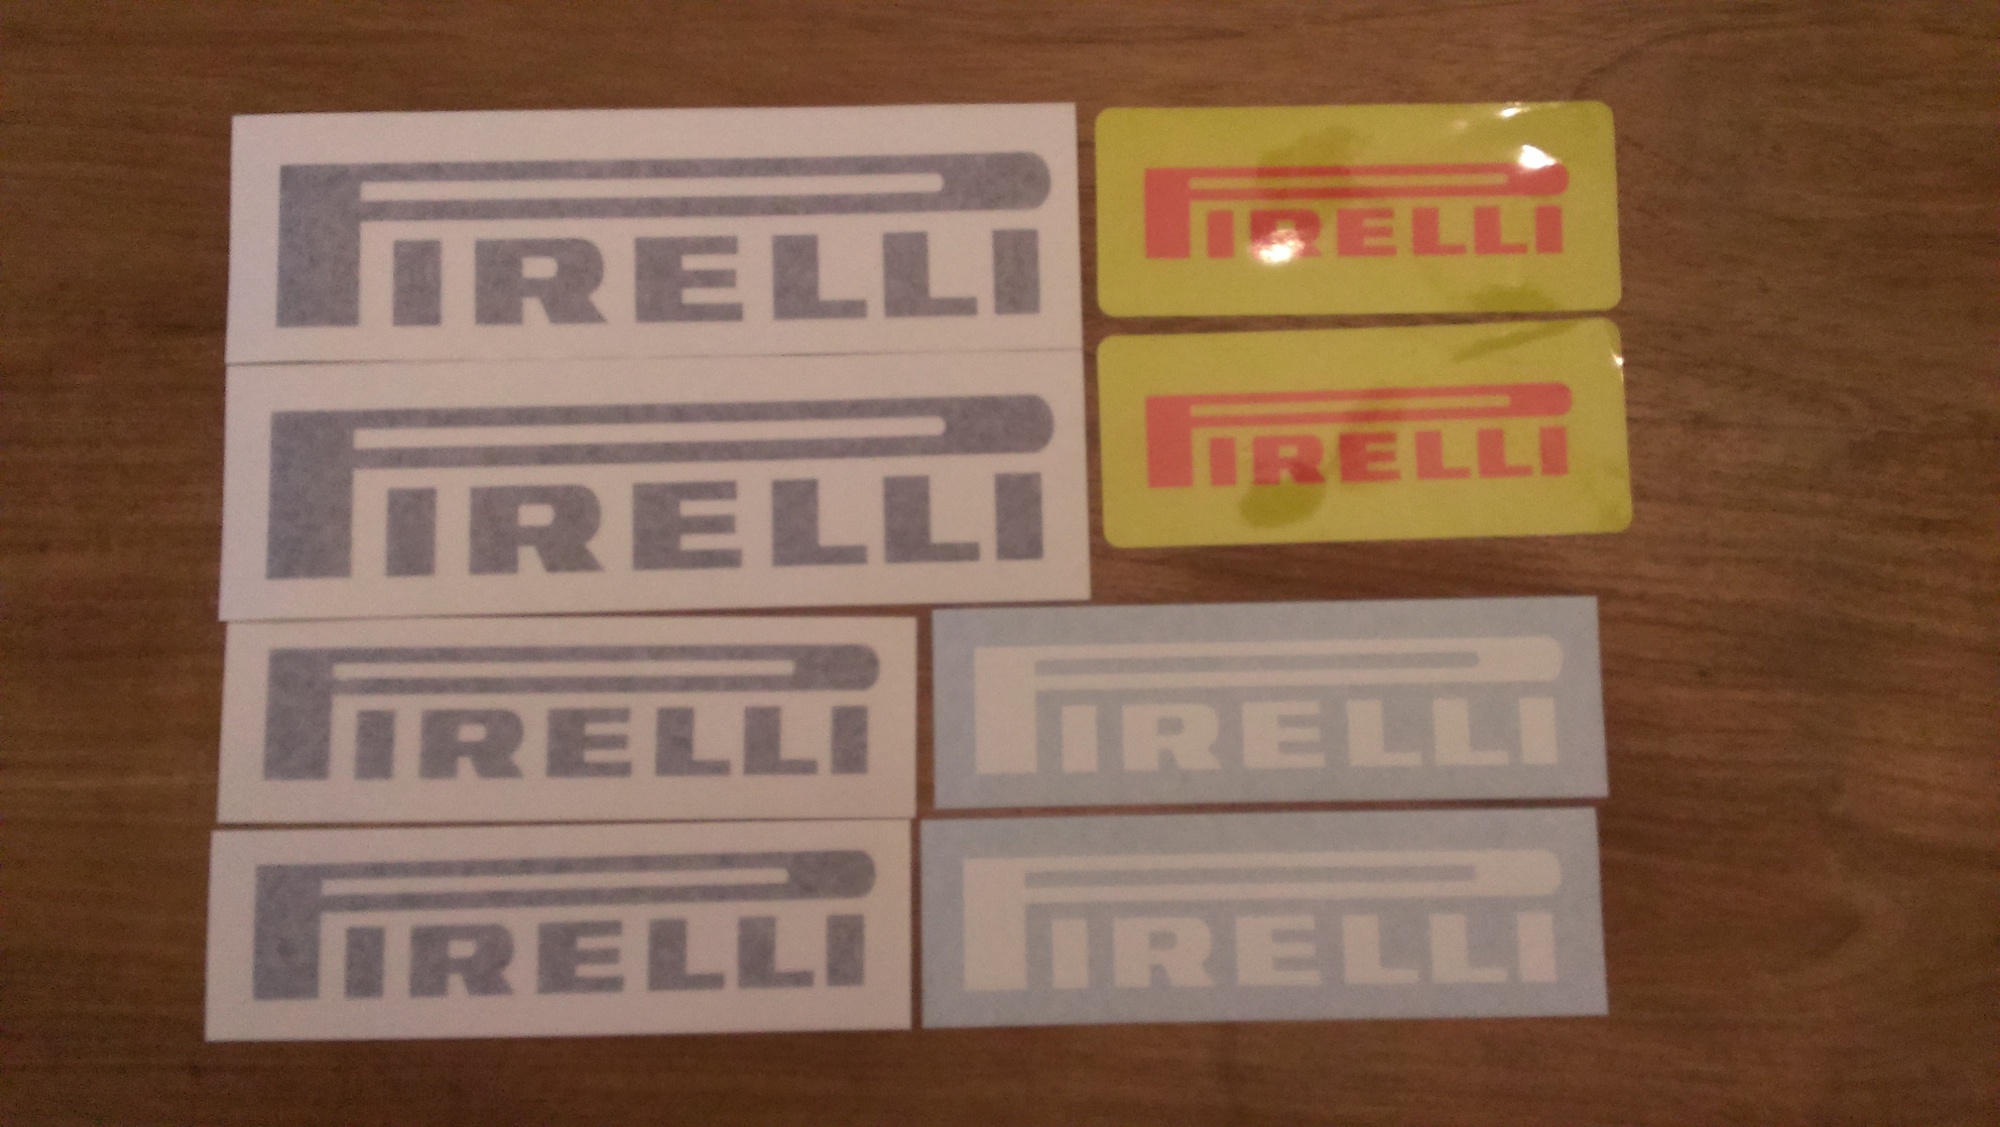 https://static.blog4ever.com/2013/12/760626/Pirelli.jpg